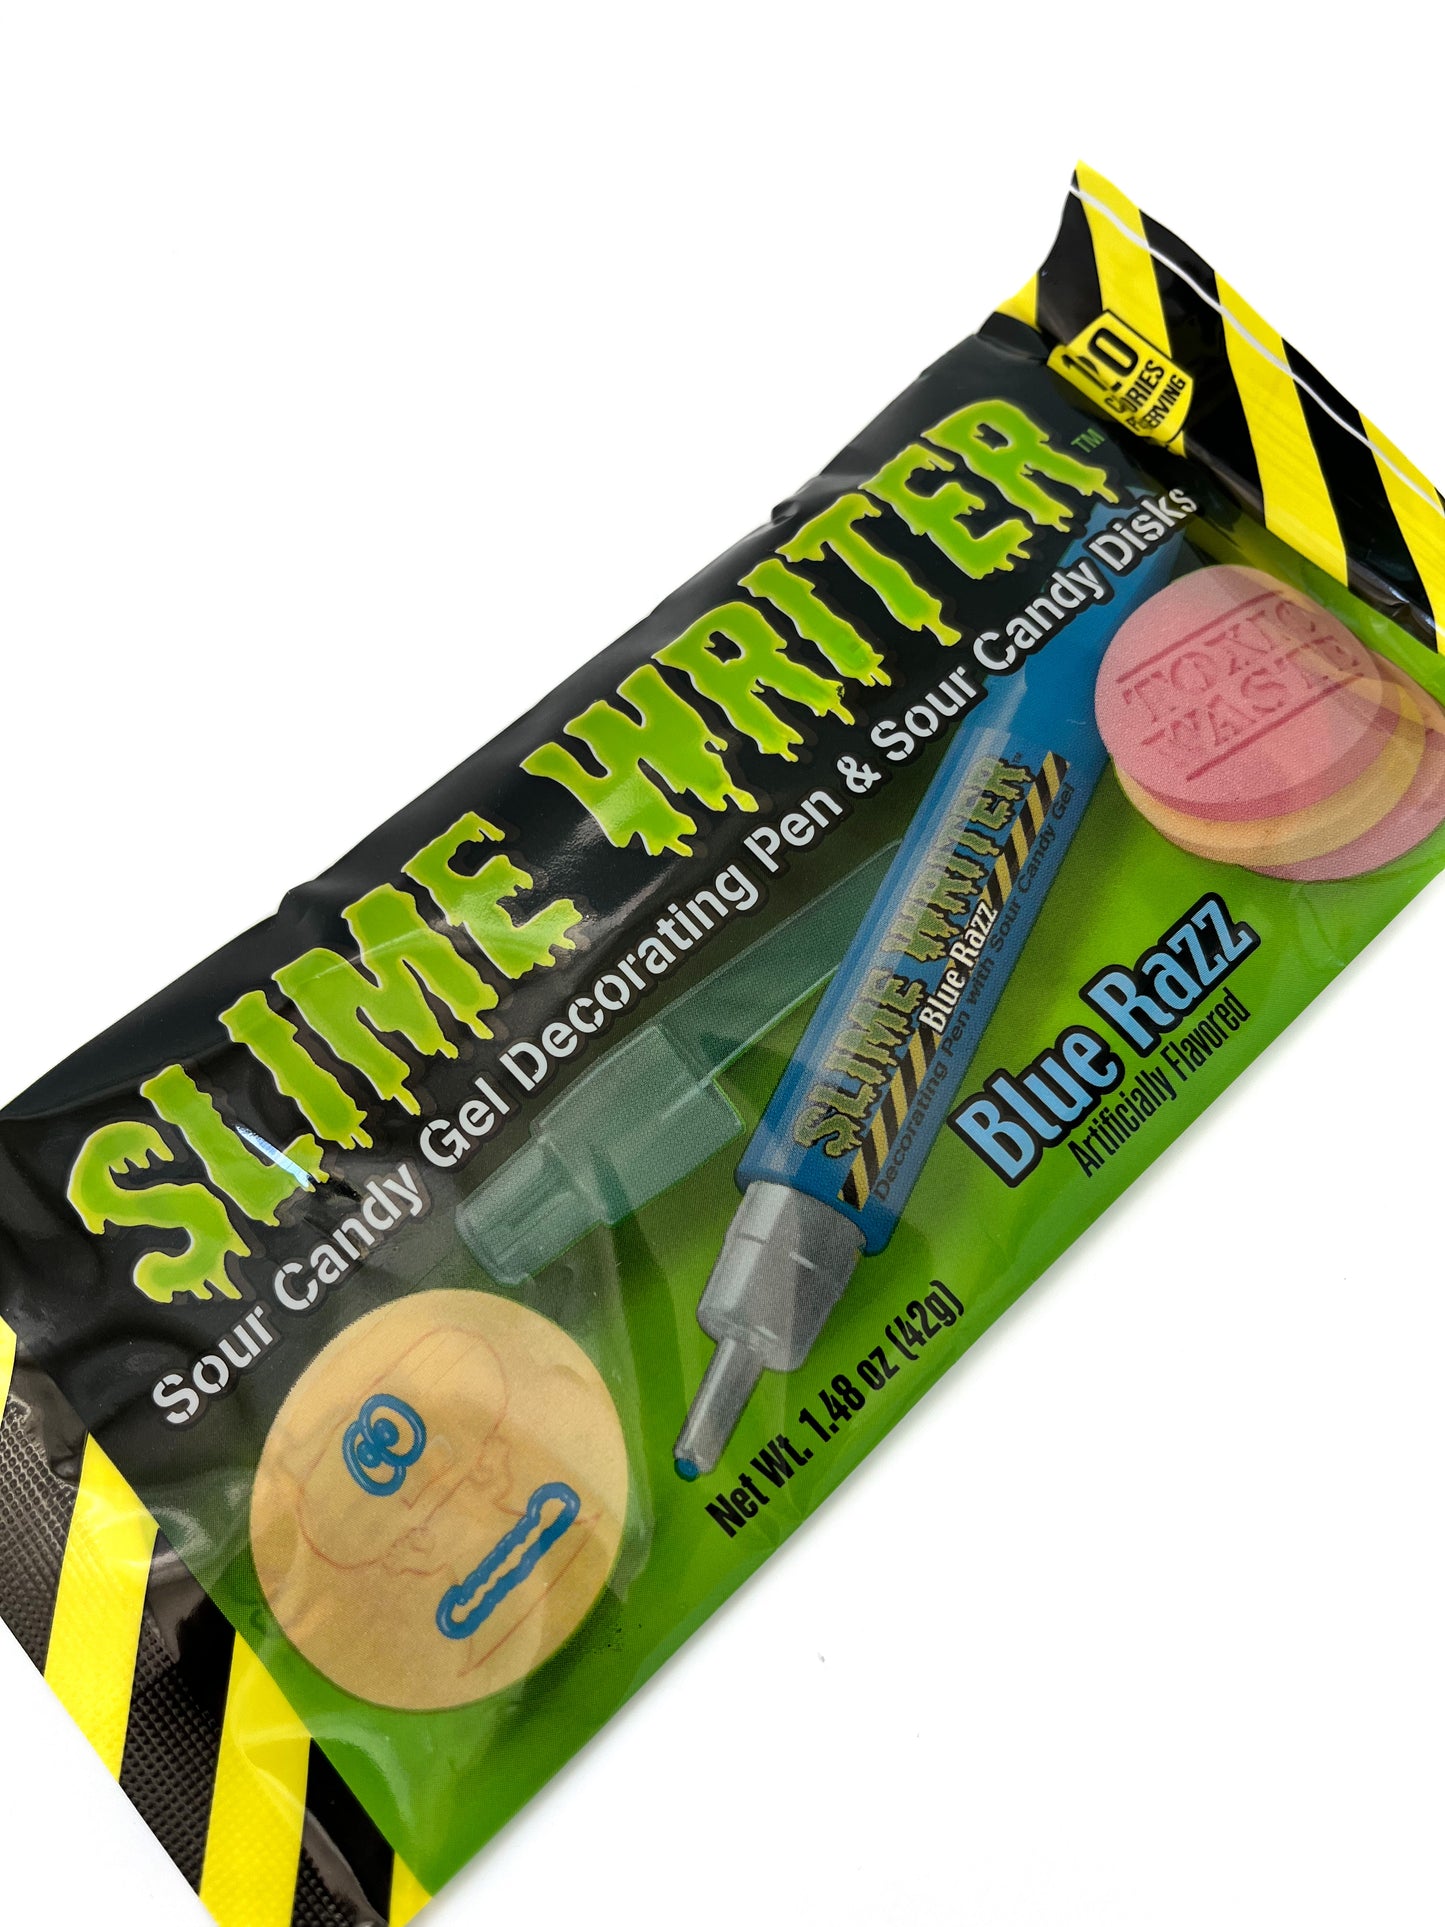 Toxic Waste Slime Writer Gel Pen & Sour Candy Disks